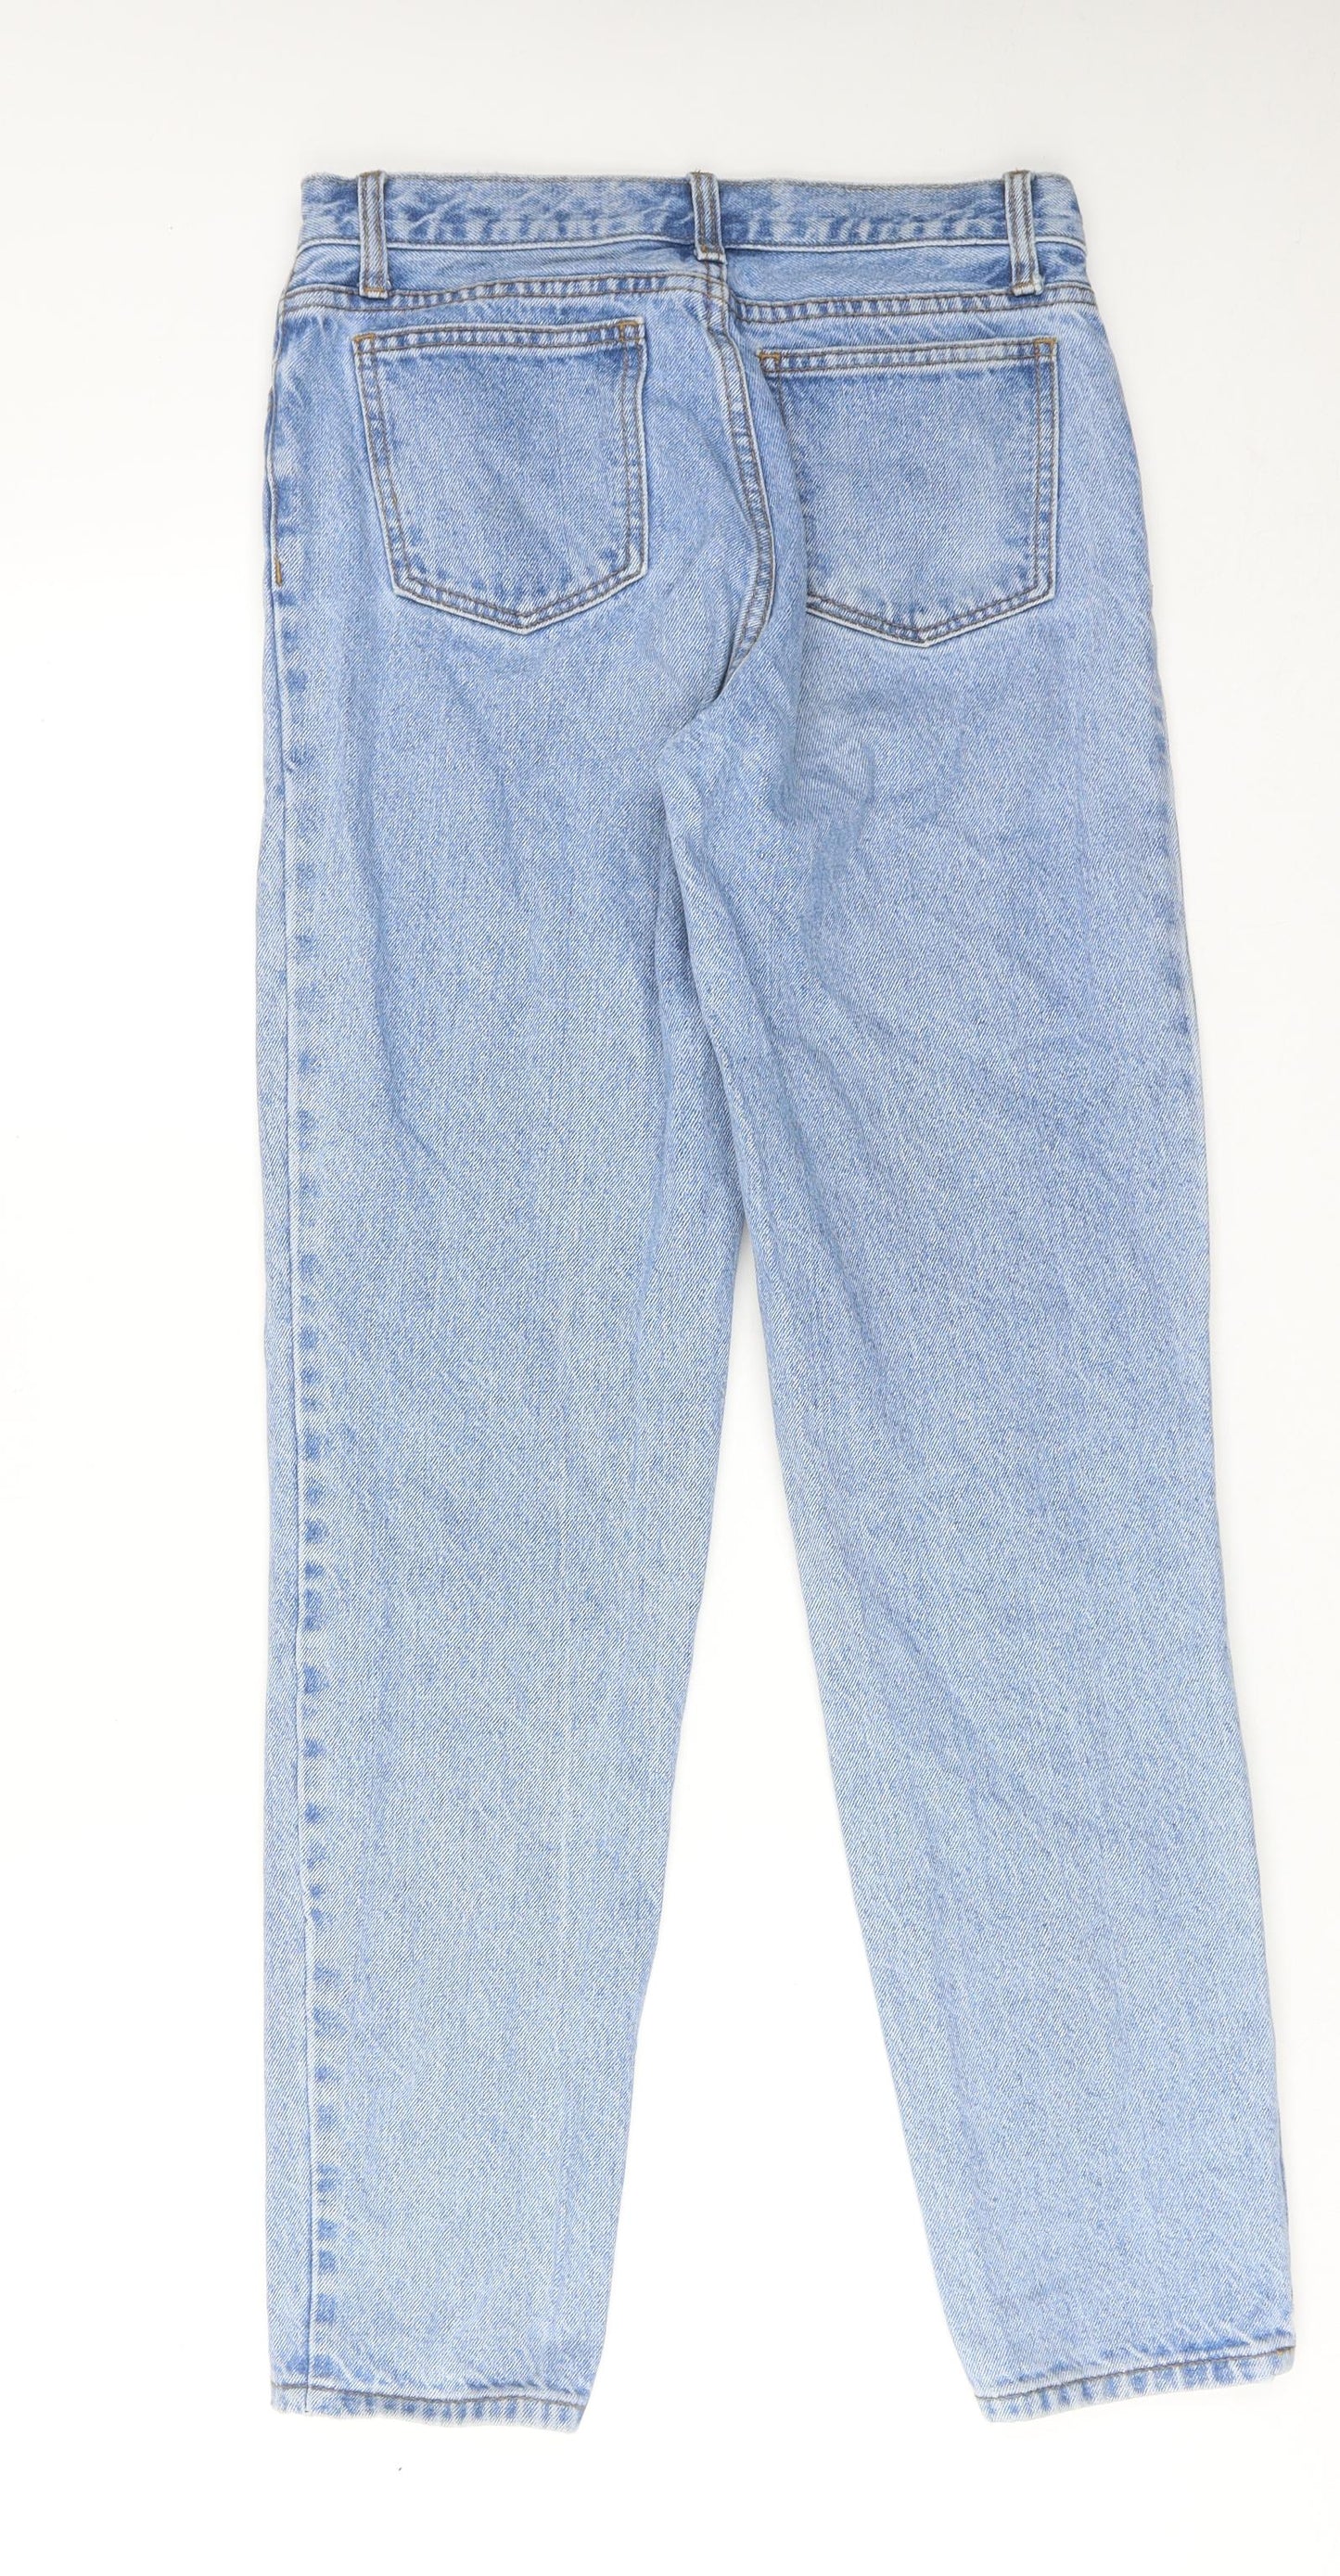 J.galt Womens Blue Cotton Straight Jeans Size M Regular Zip